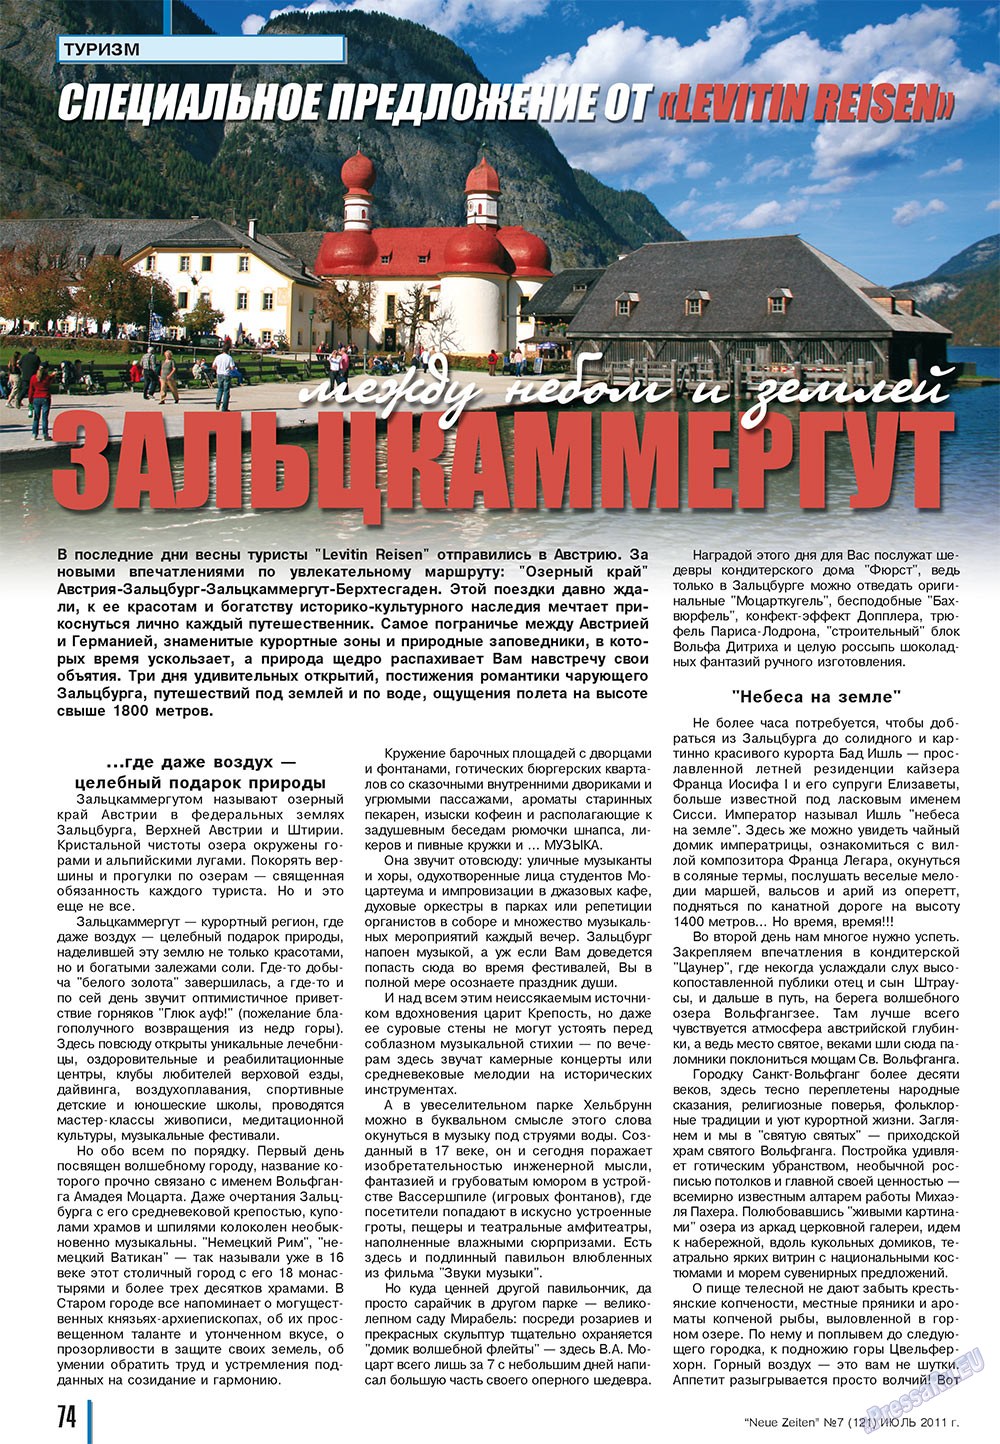 Neue Zeiten (журнал). 2011 год, номер 7, стр. 74